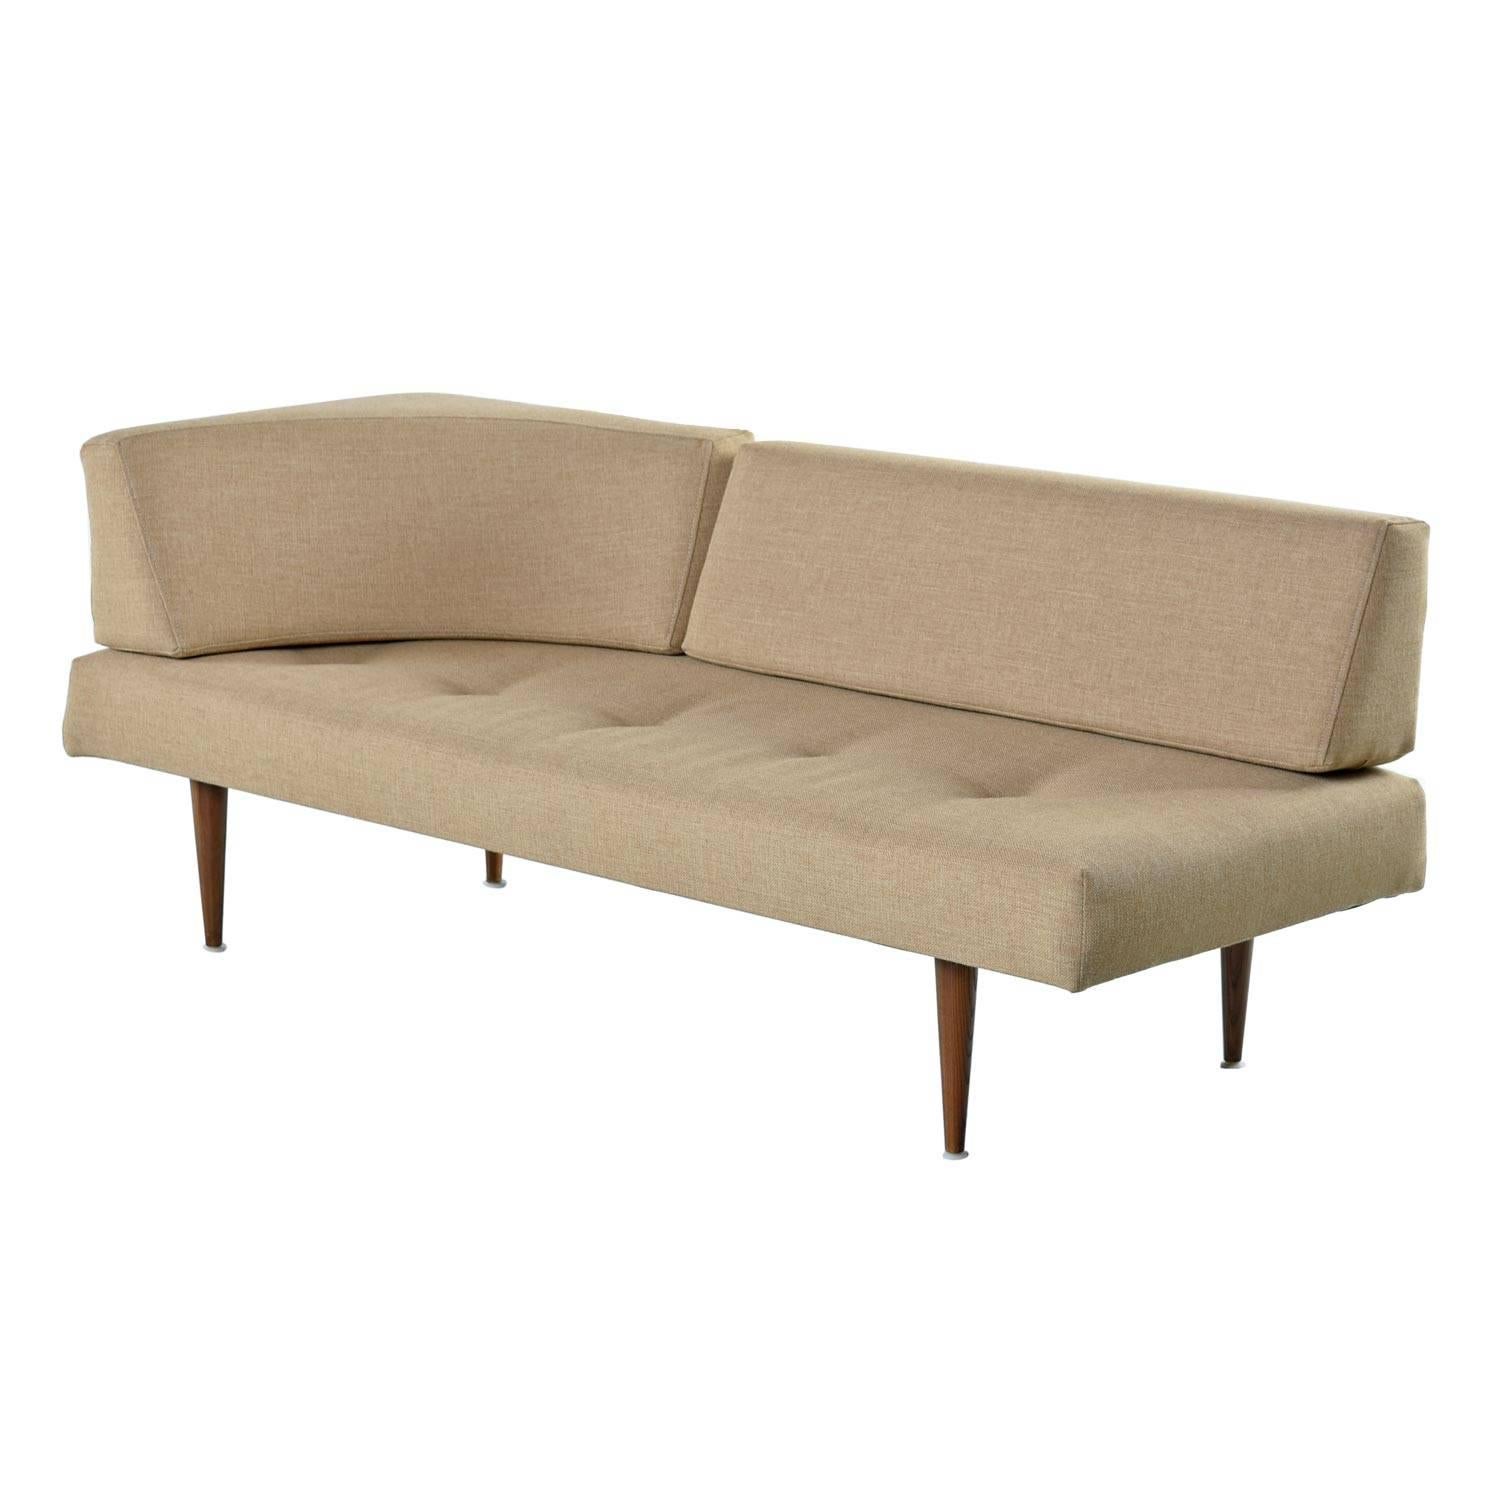 Peter Hvidt Style Scandinavian Modern Daybed Sofa